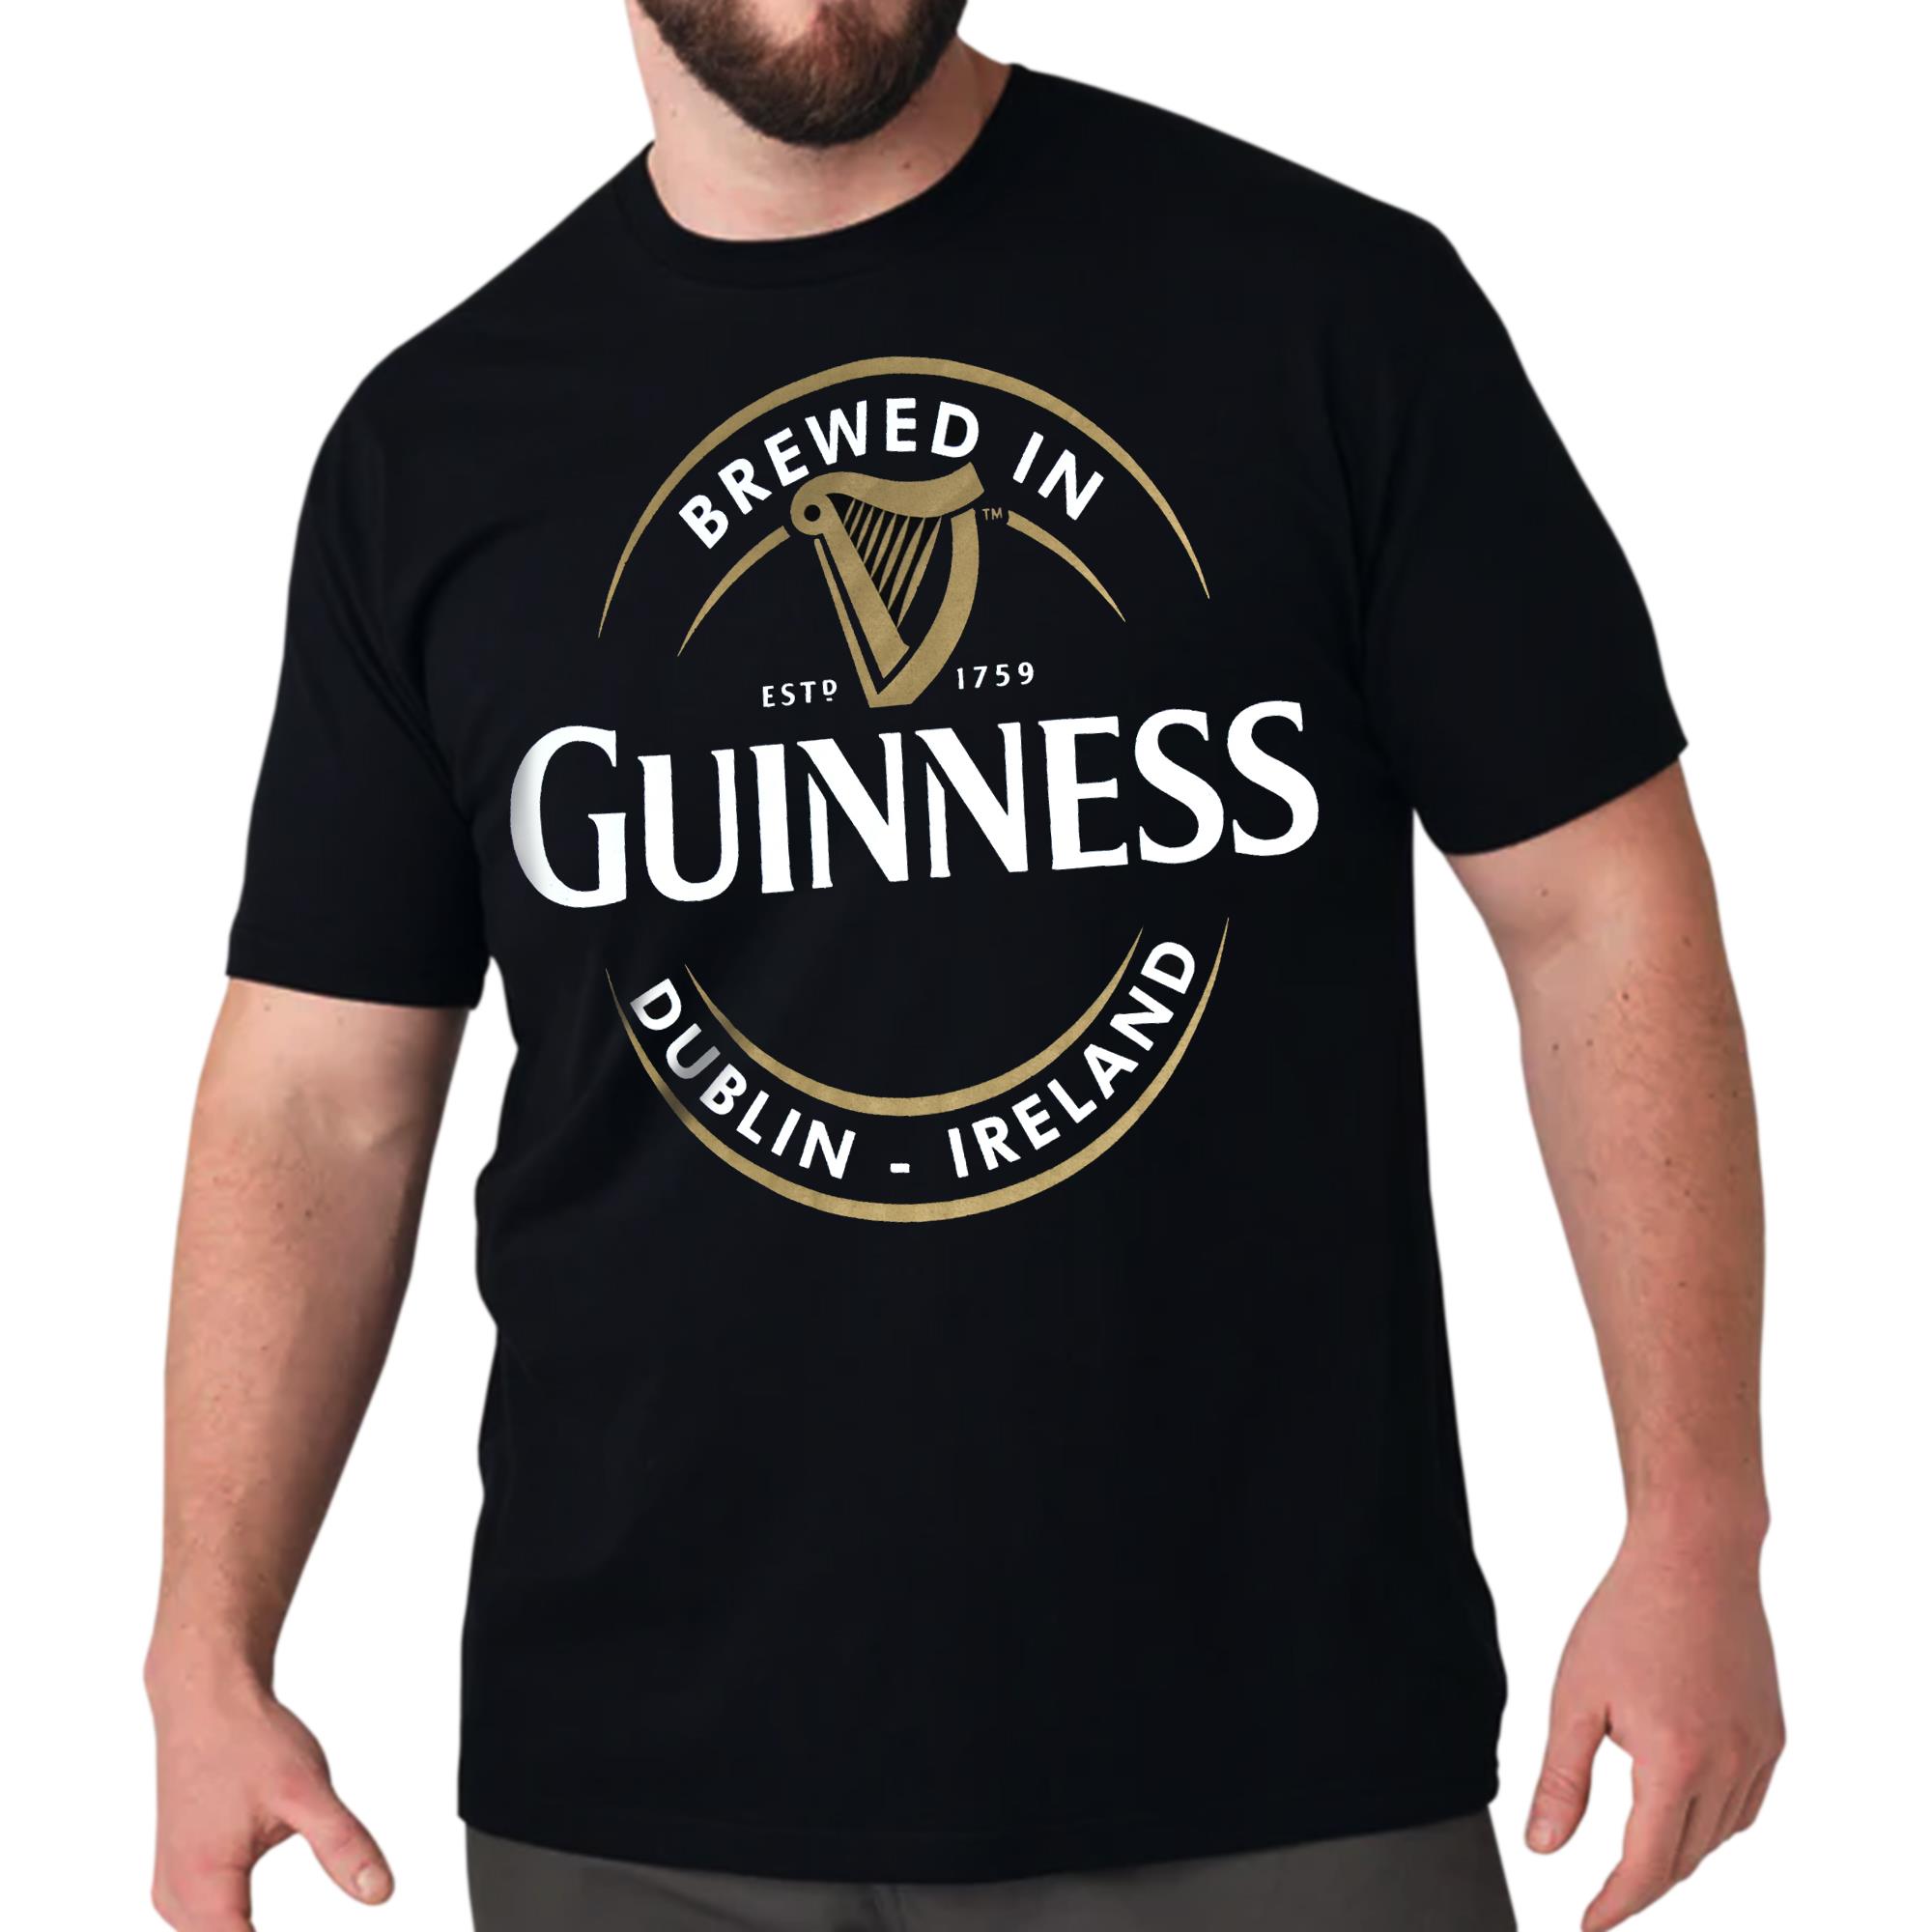 Brewed in Dublin Ireland T-Shirt